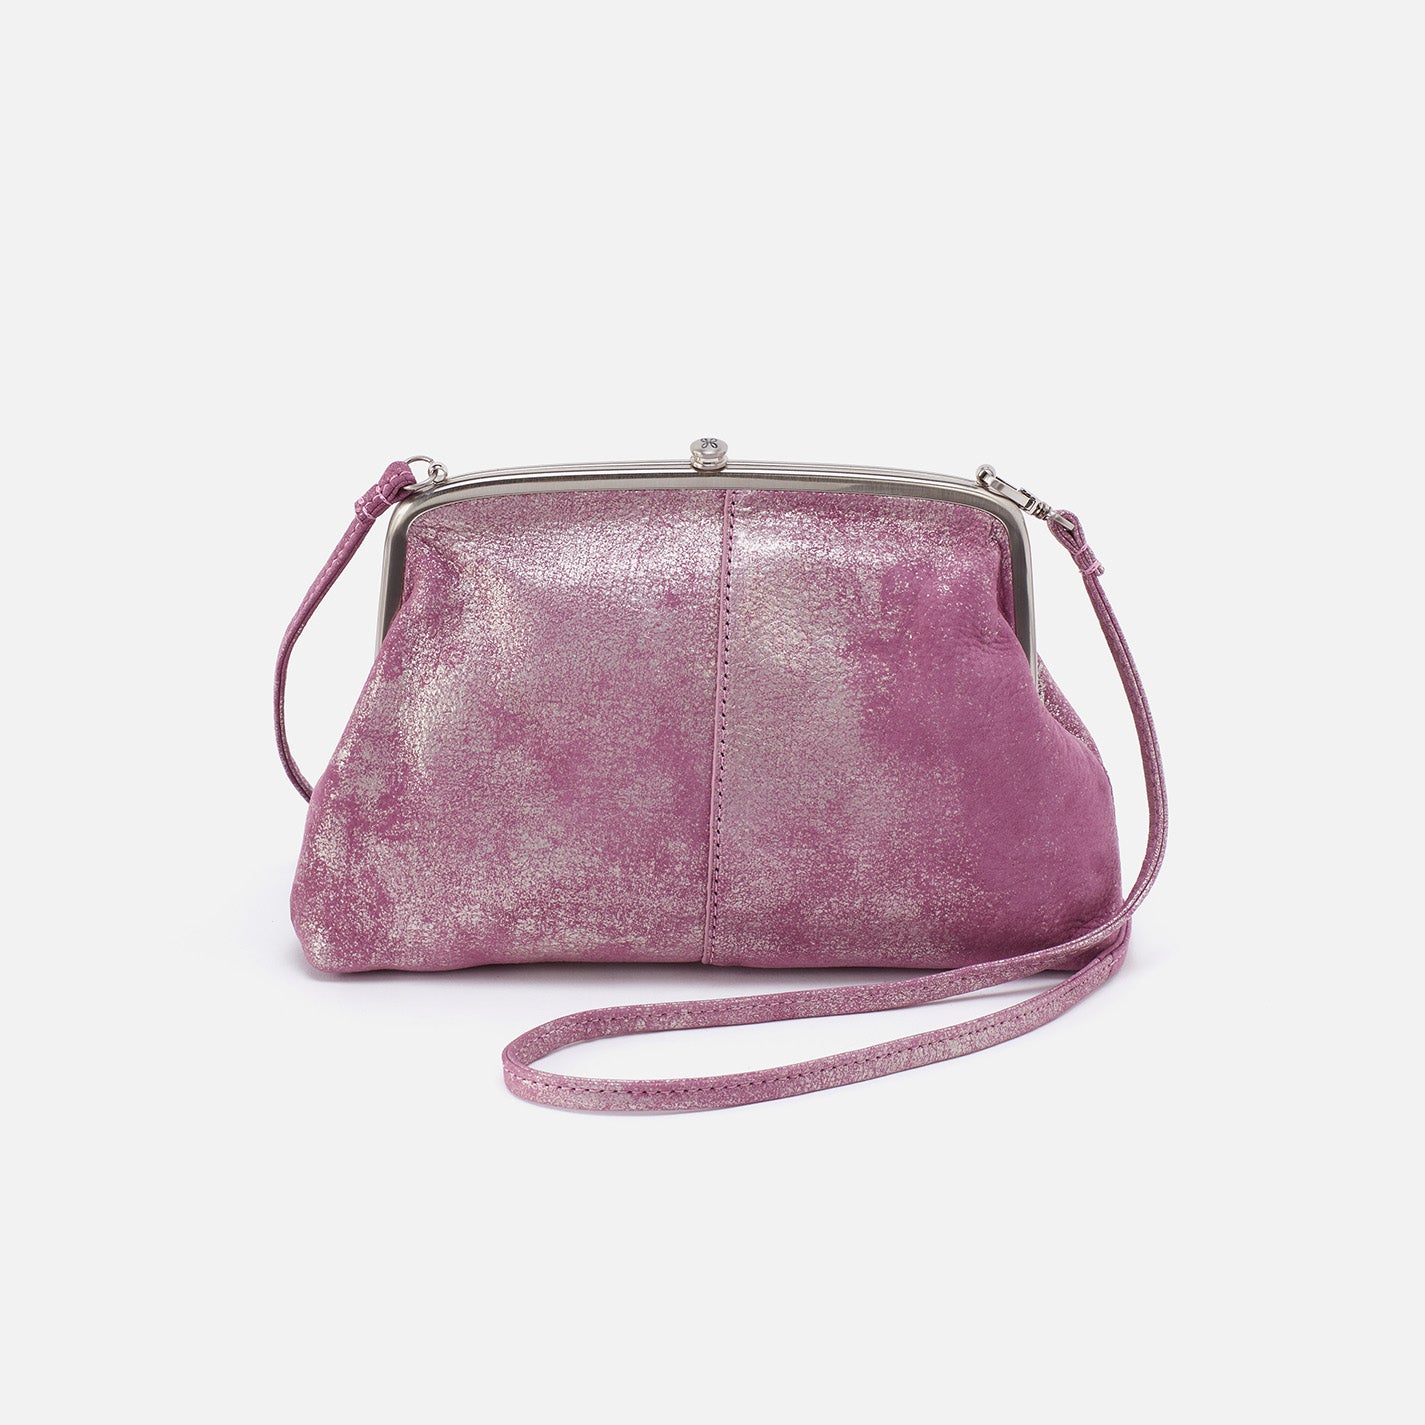 Wristlet Wallet PATTERN Cute Clutch Purse Baguette Bag 